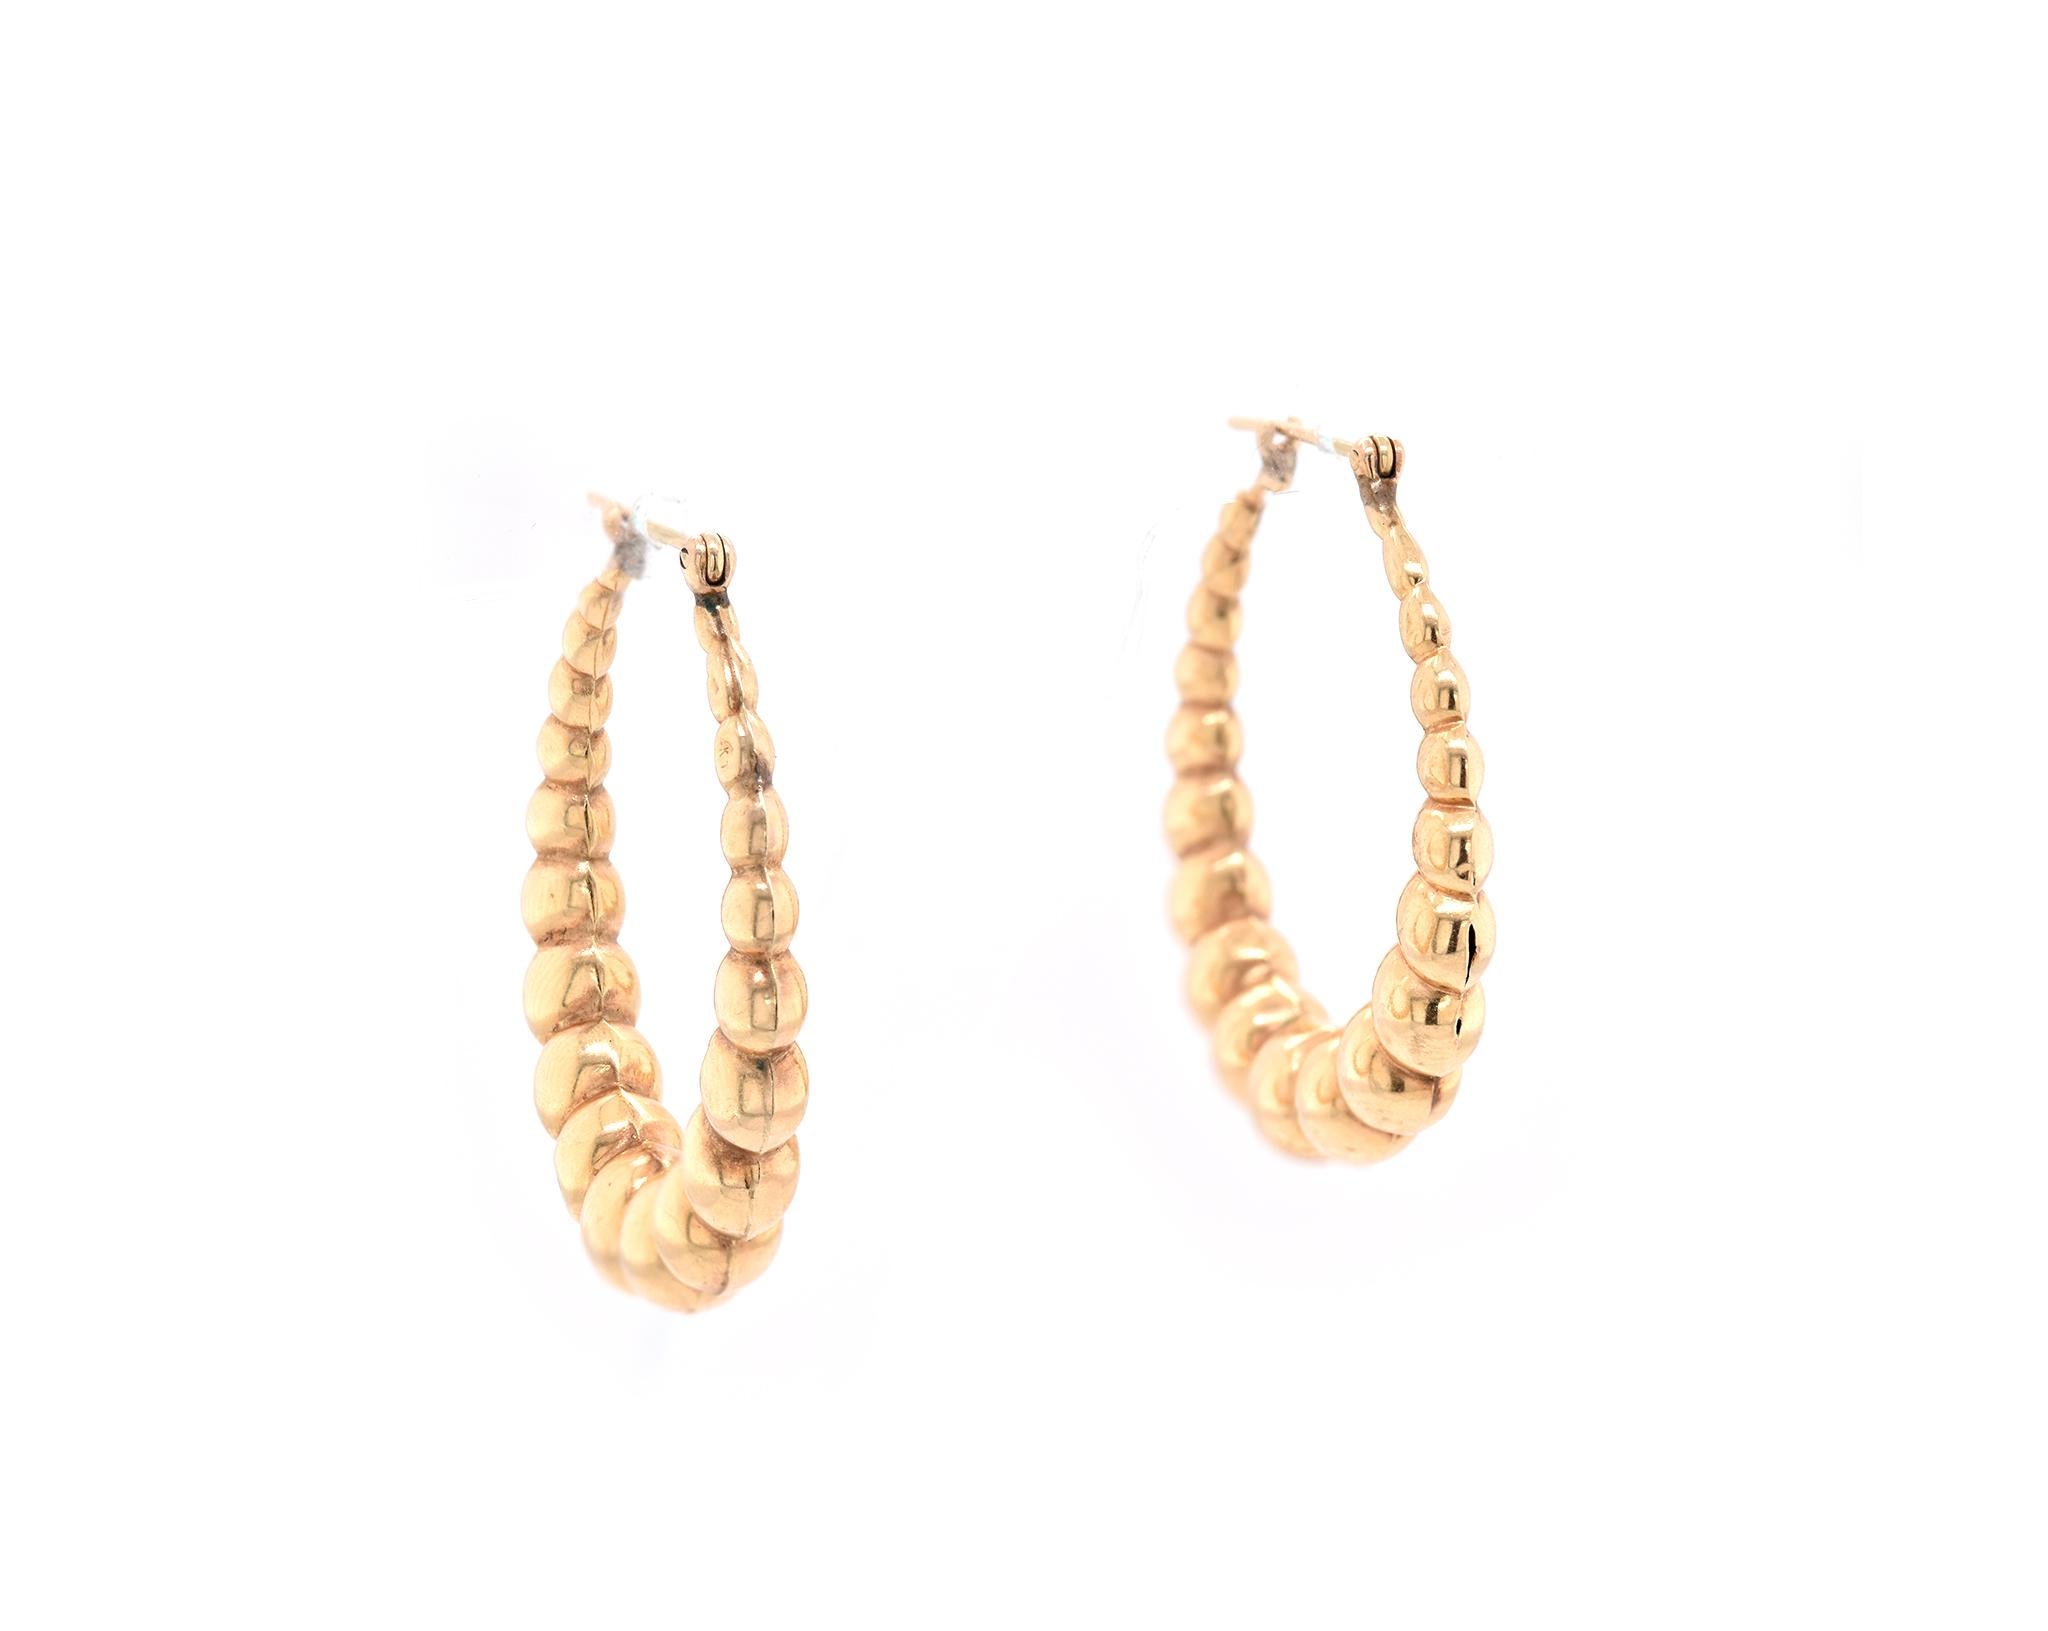 Material: 14k yellow gold
Dimensions: earrings measure 37.46mm wide
Fastenings: snap closure
Weight: 6.40 grams
